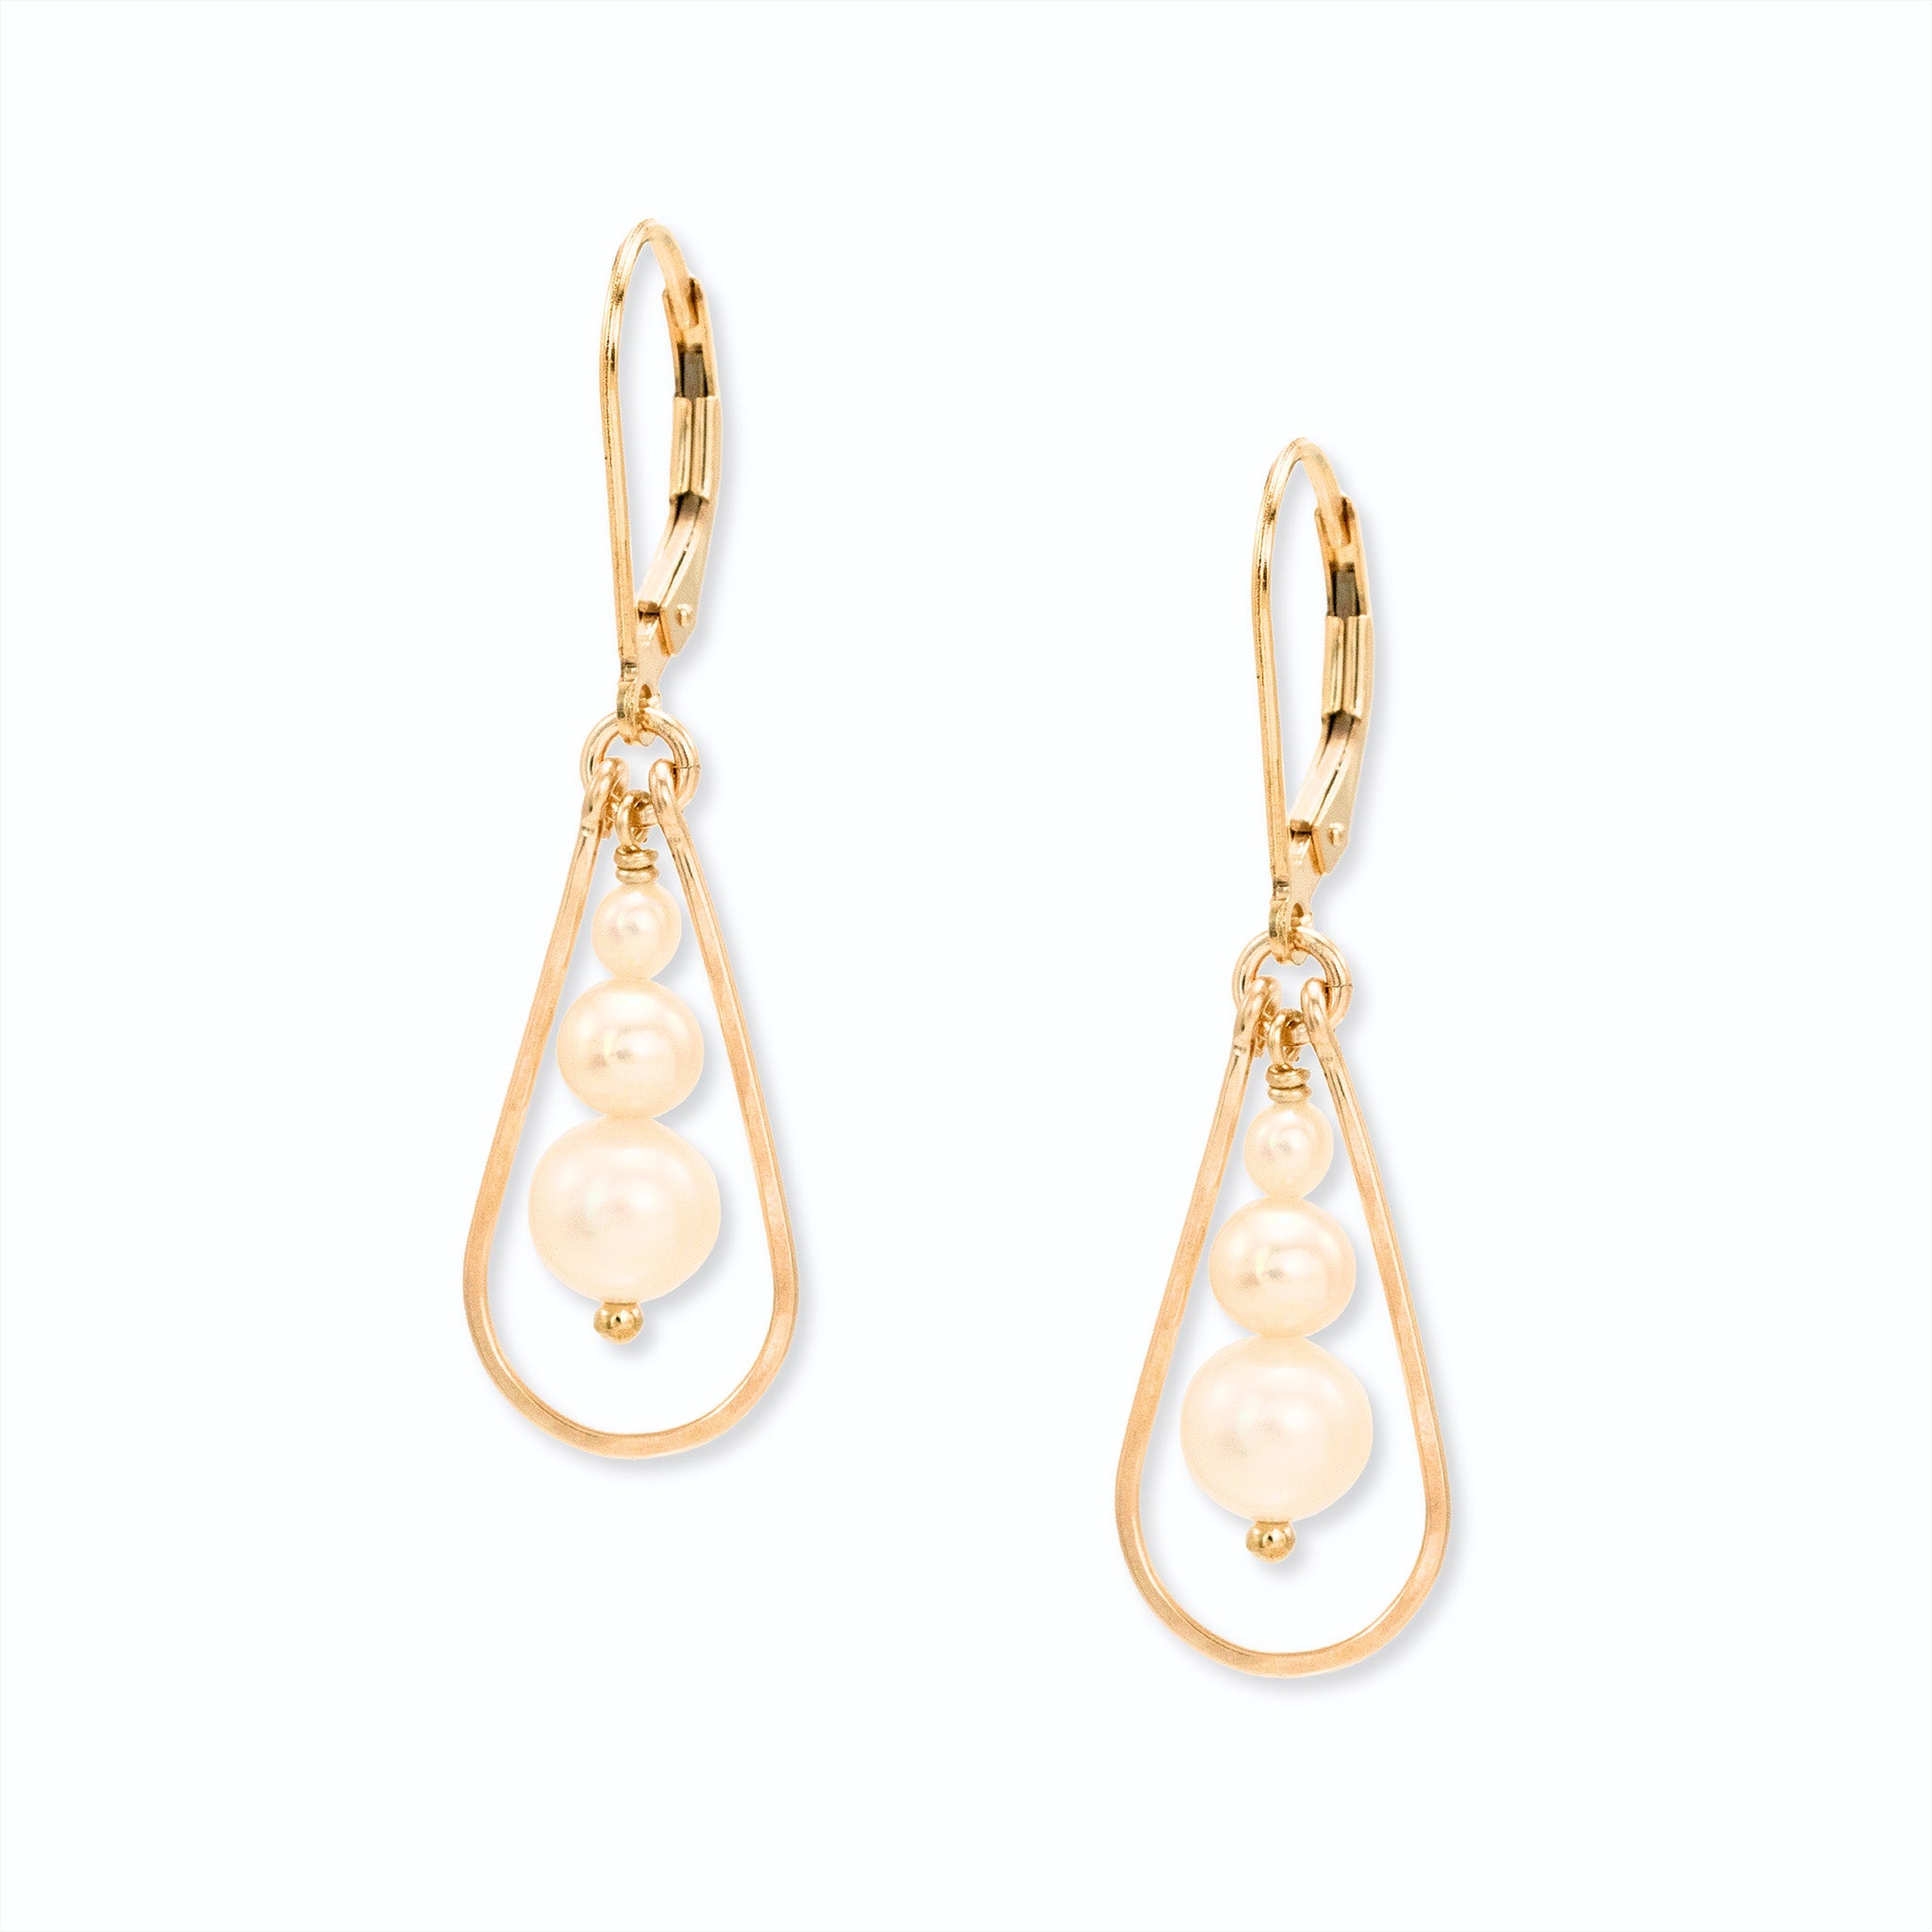 Pearl Trifecta Earring - Earrings